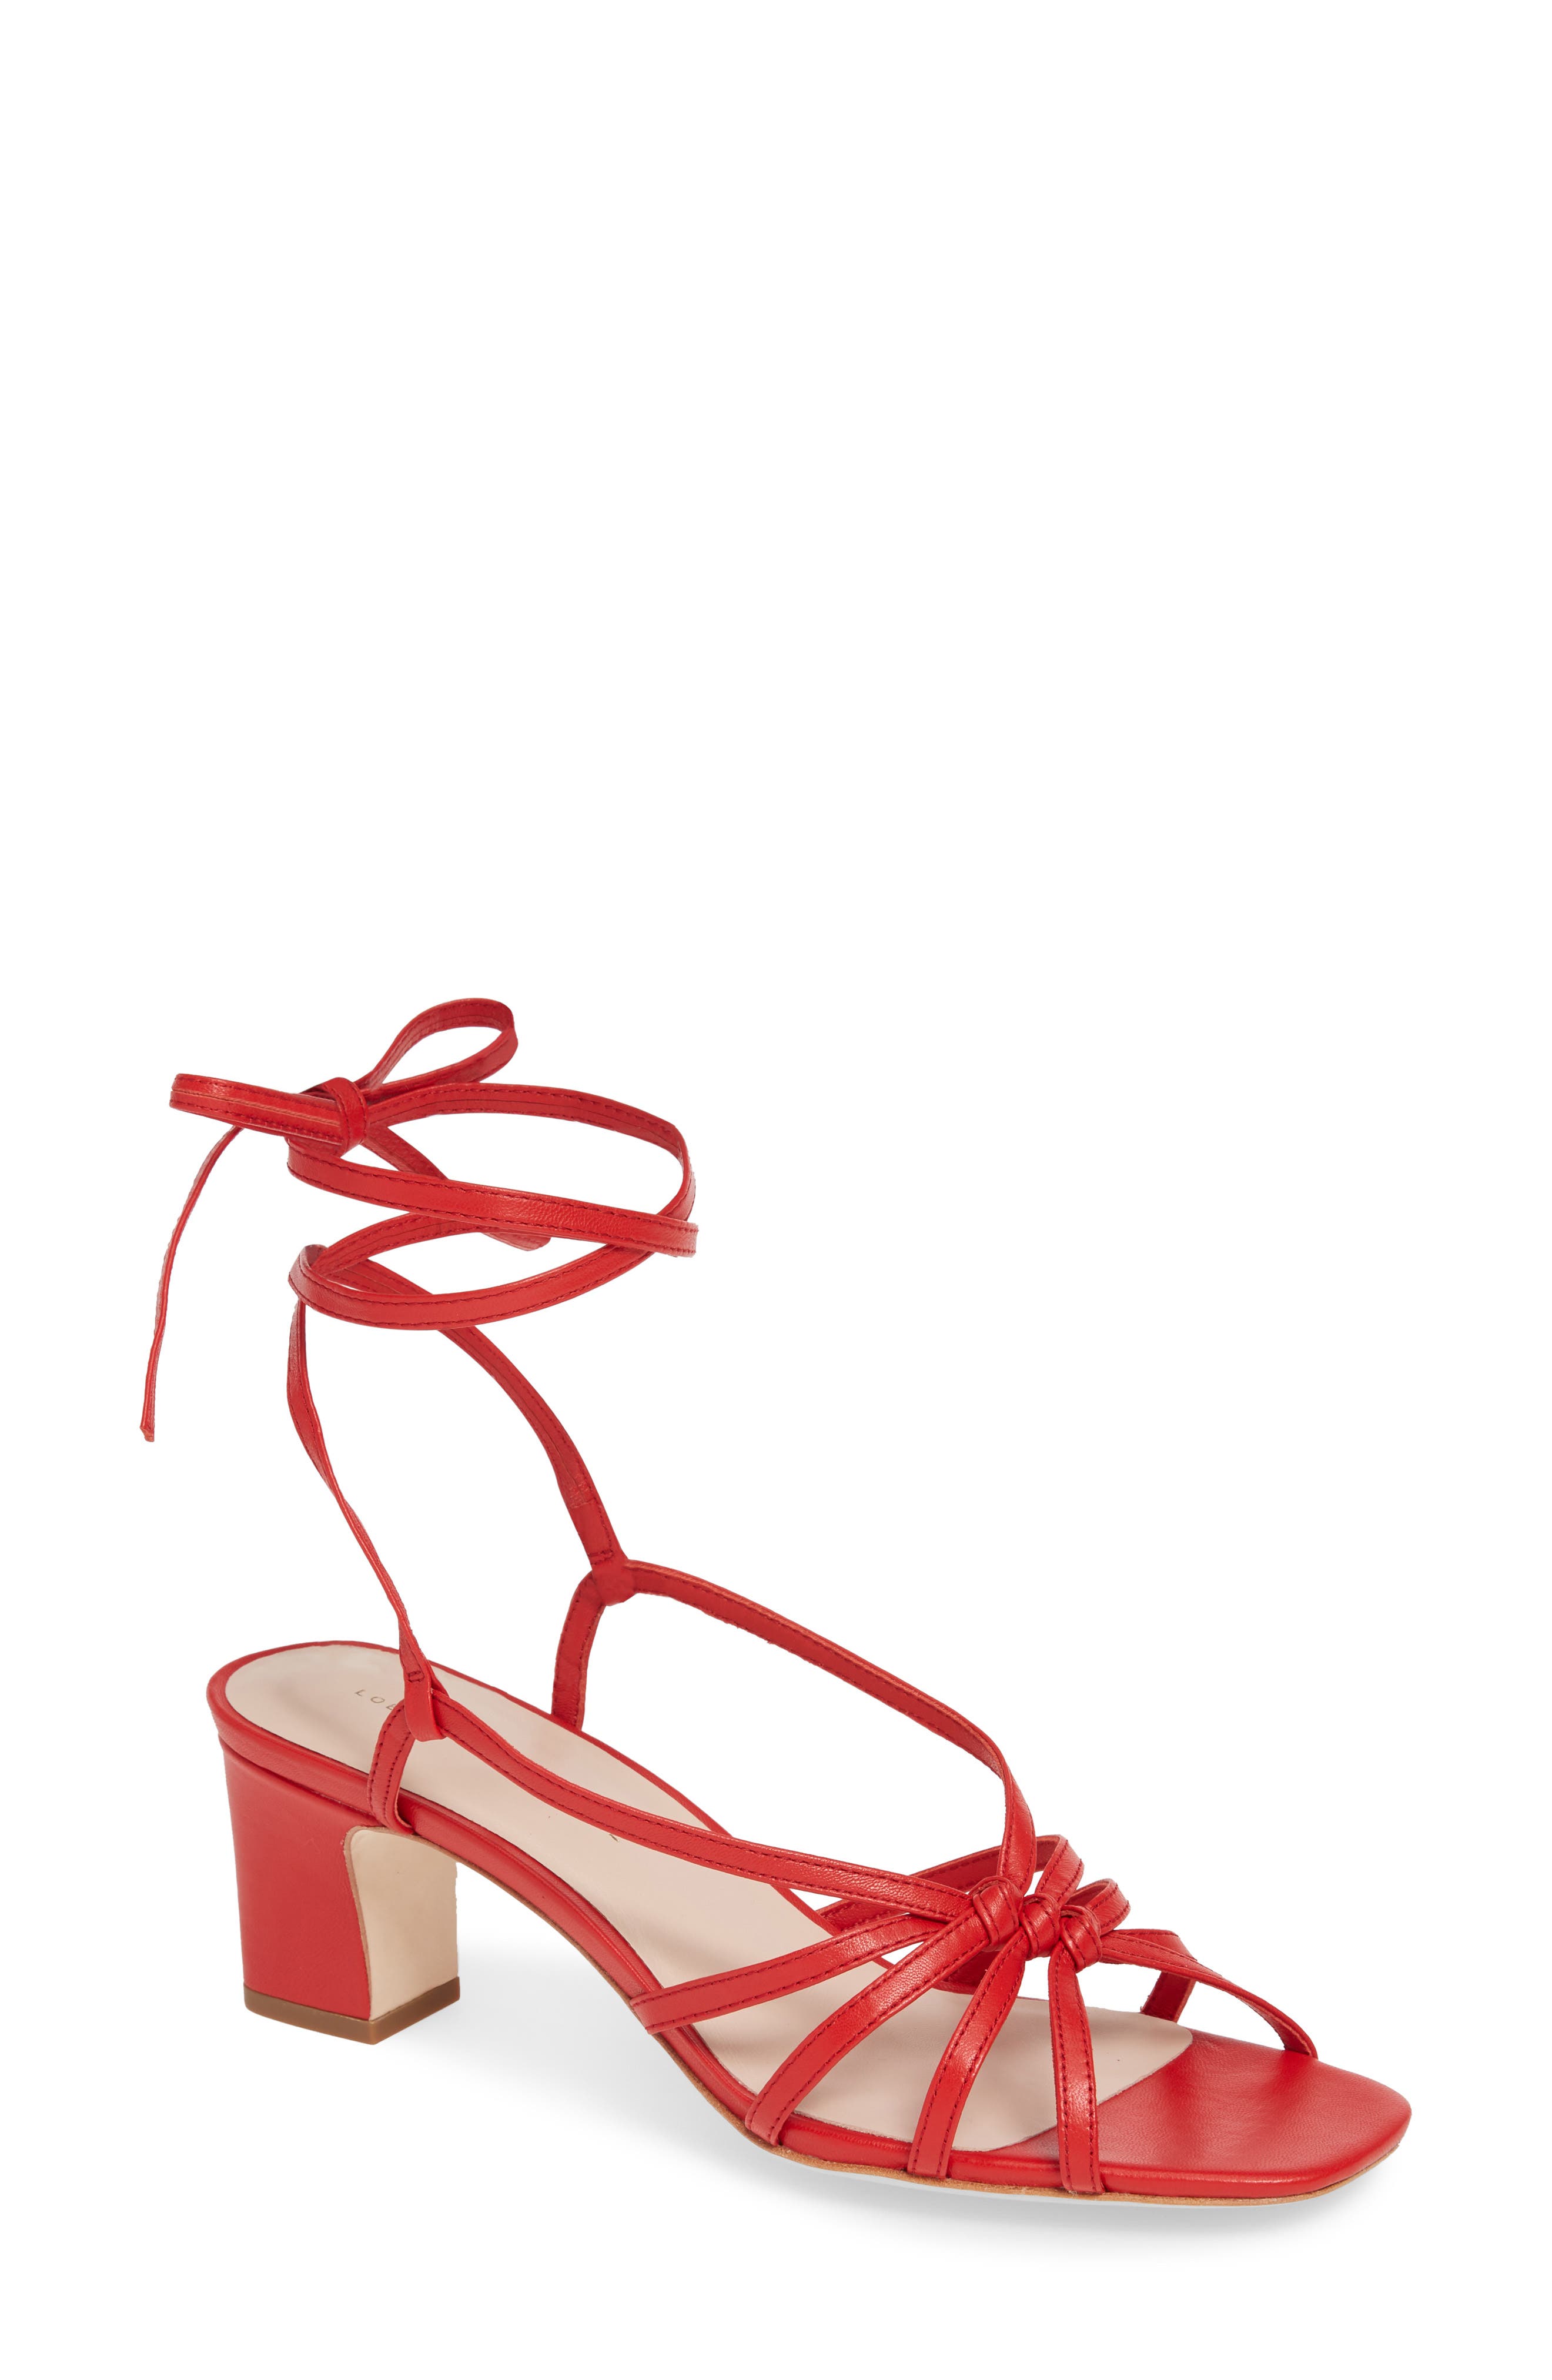 loeffler randall red sandals